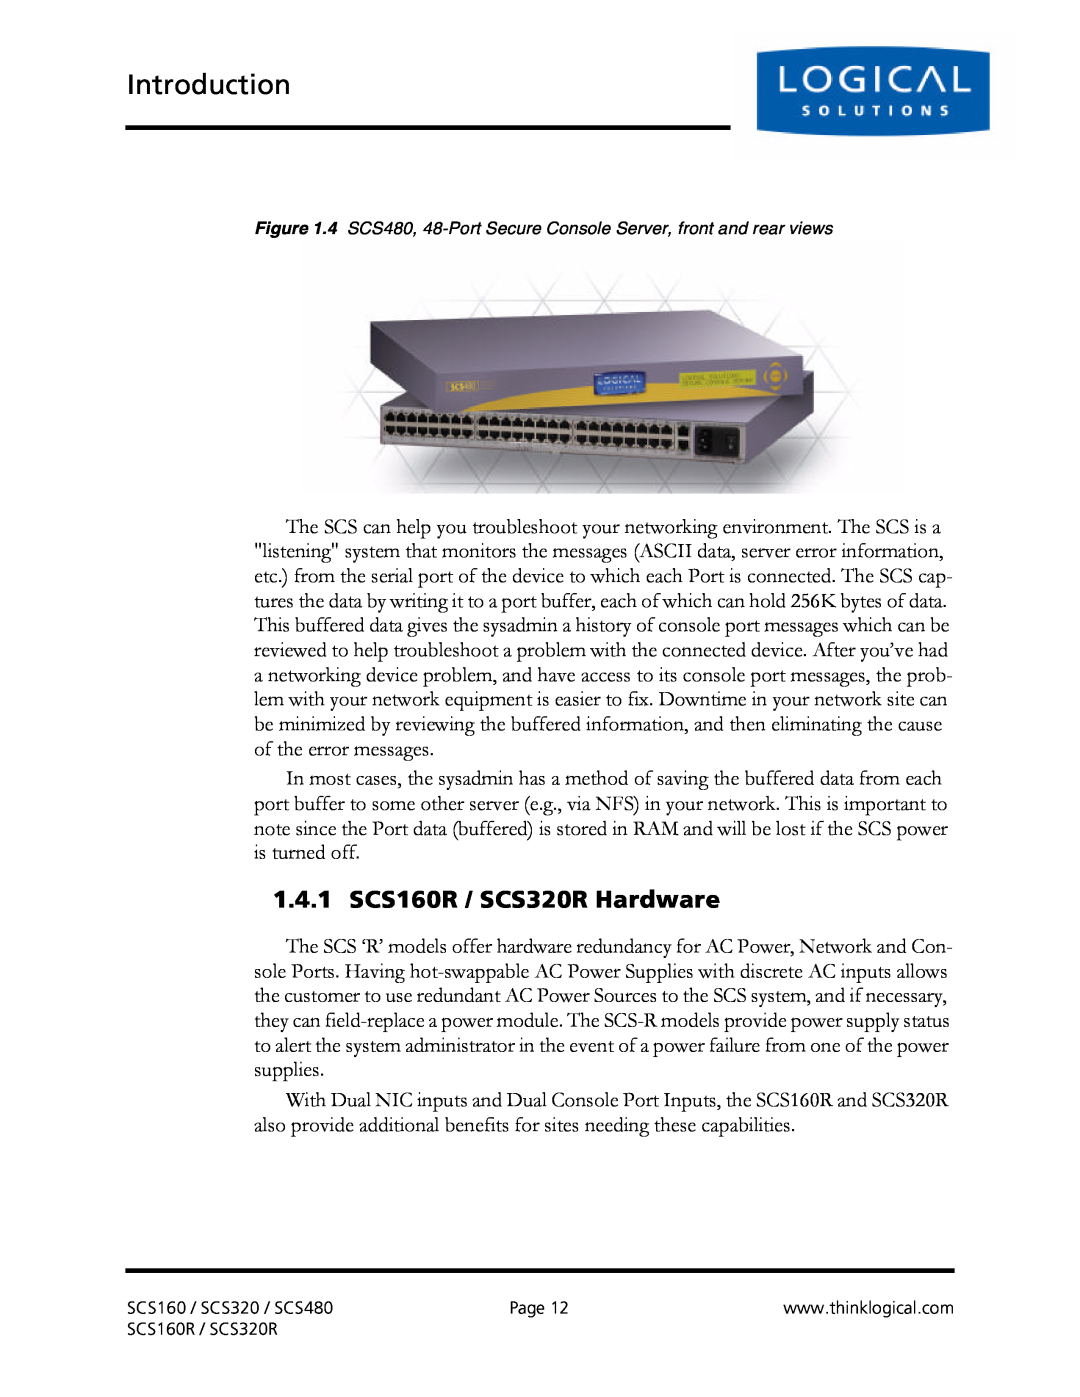 Logical Solutions SCS-R manual 1.4.1 SCS160R / SCS320R Hardware, Introduction 